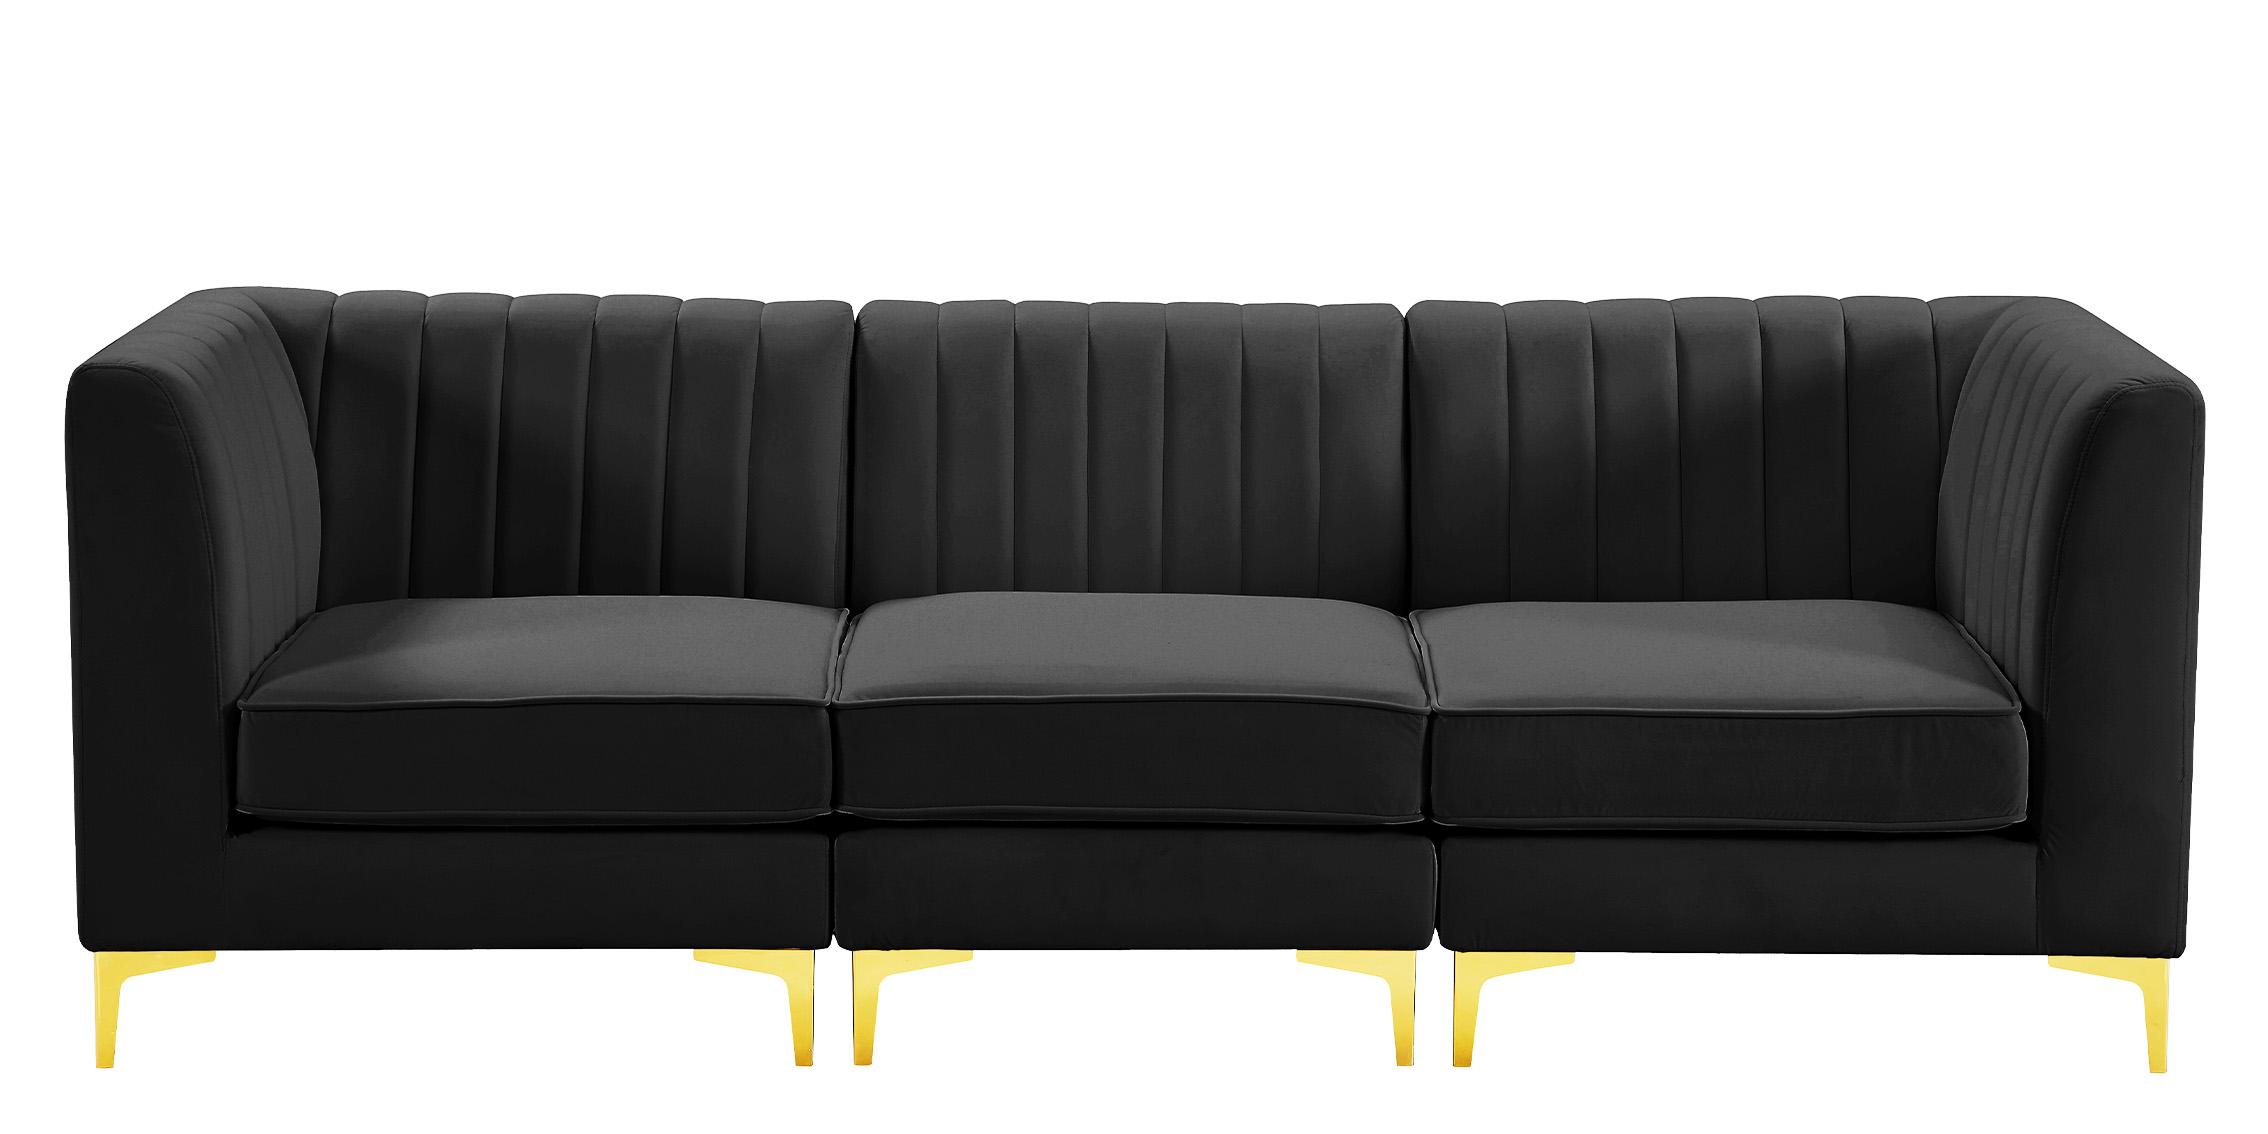 

    
Meridian Furniture ALINA 604Black-S93 Modular Sectional Sofa Black 604Black-S93
